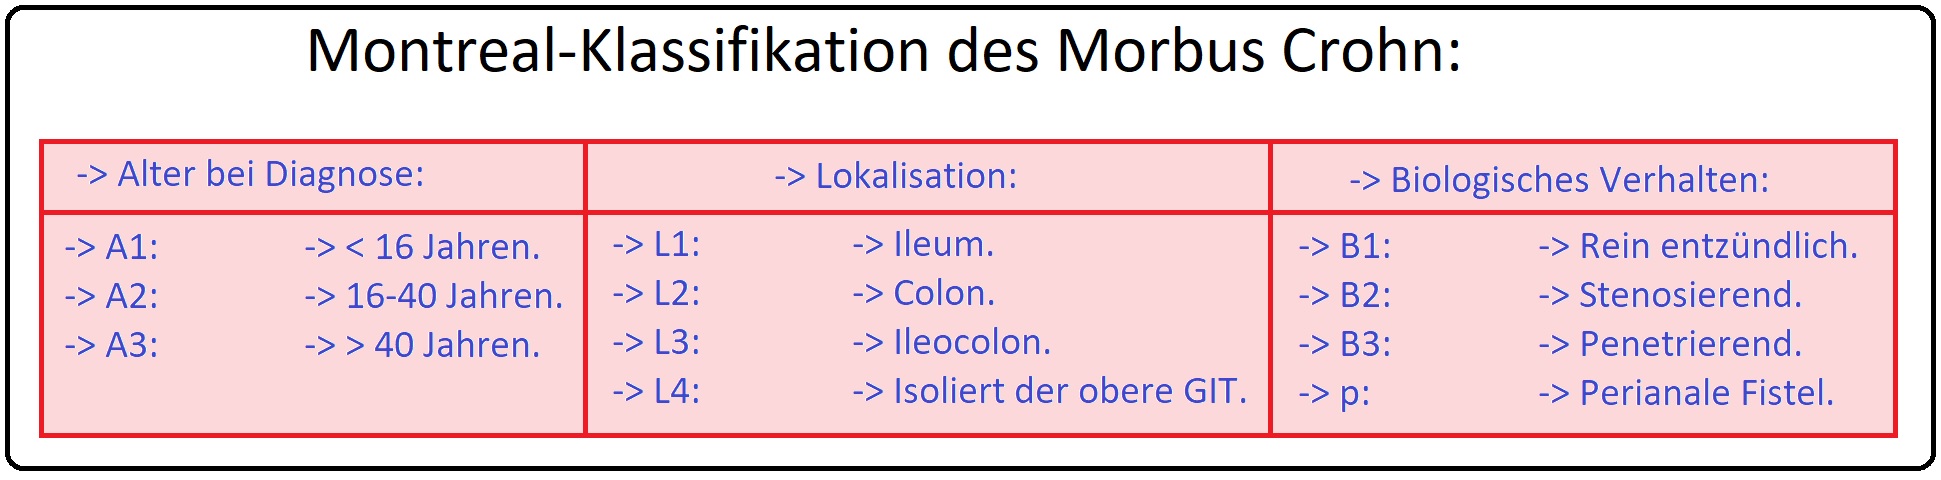 567 Montreal Klassifikation des Morbus Crohn